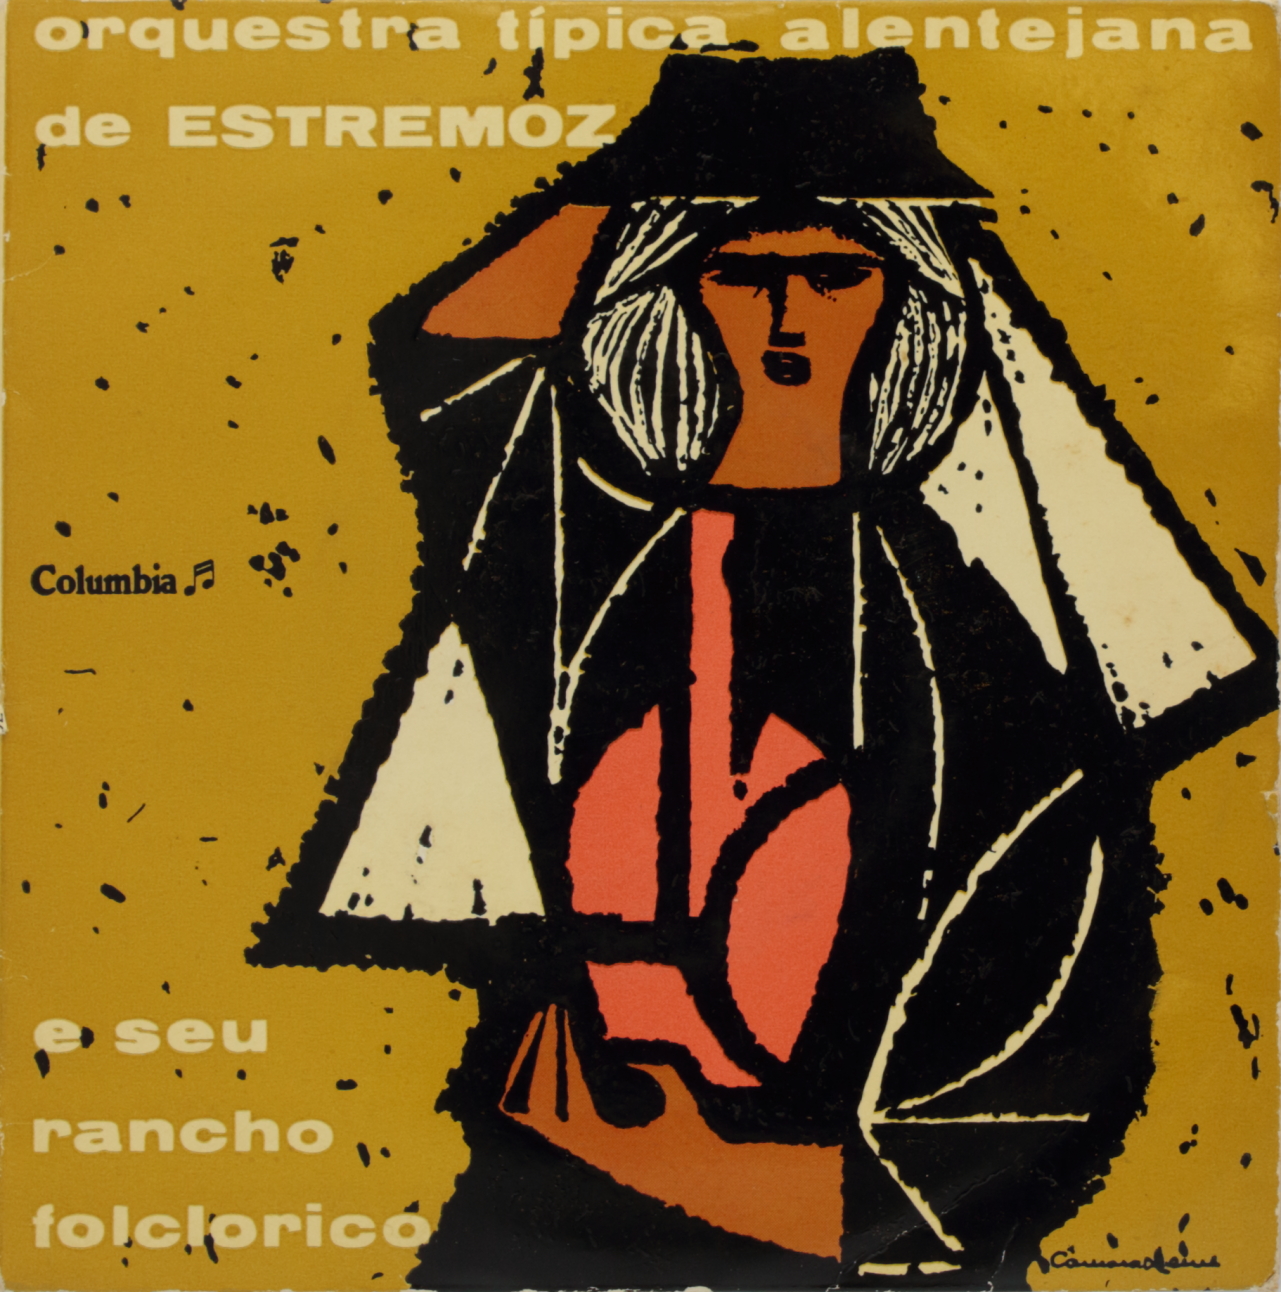 Orquestra típica alentejana de Estremoz e seu rancho folclorico